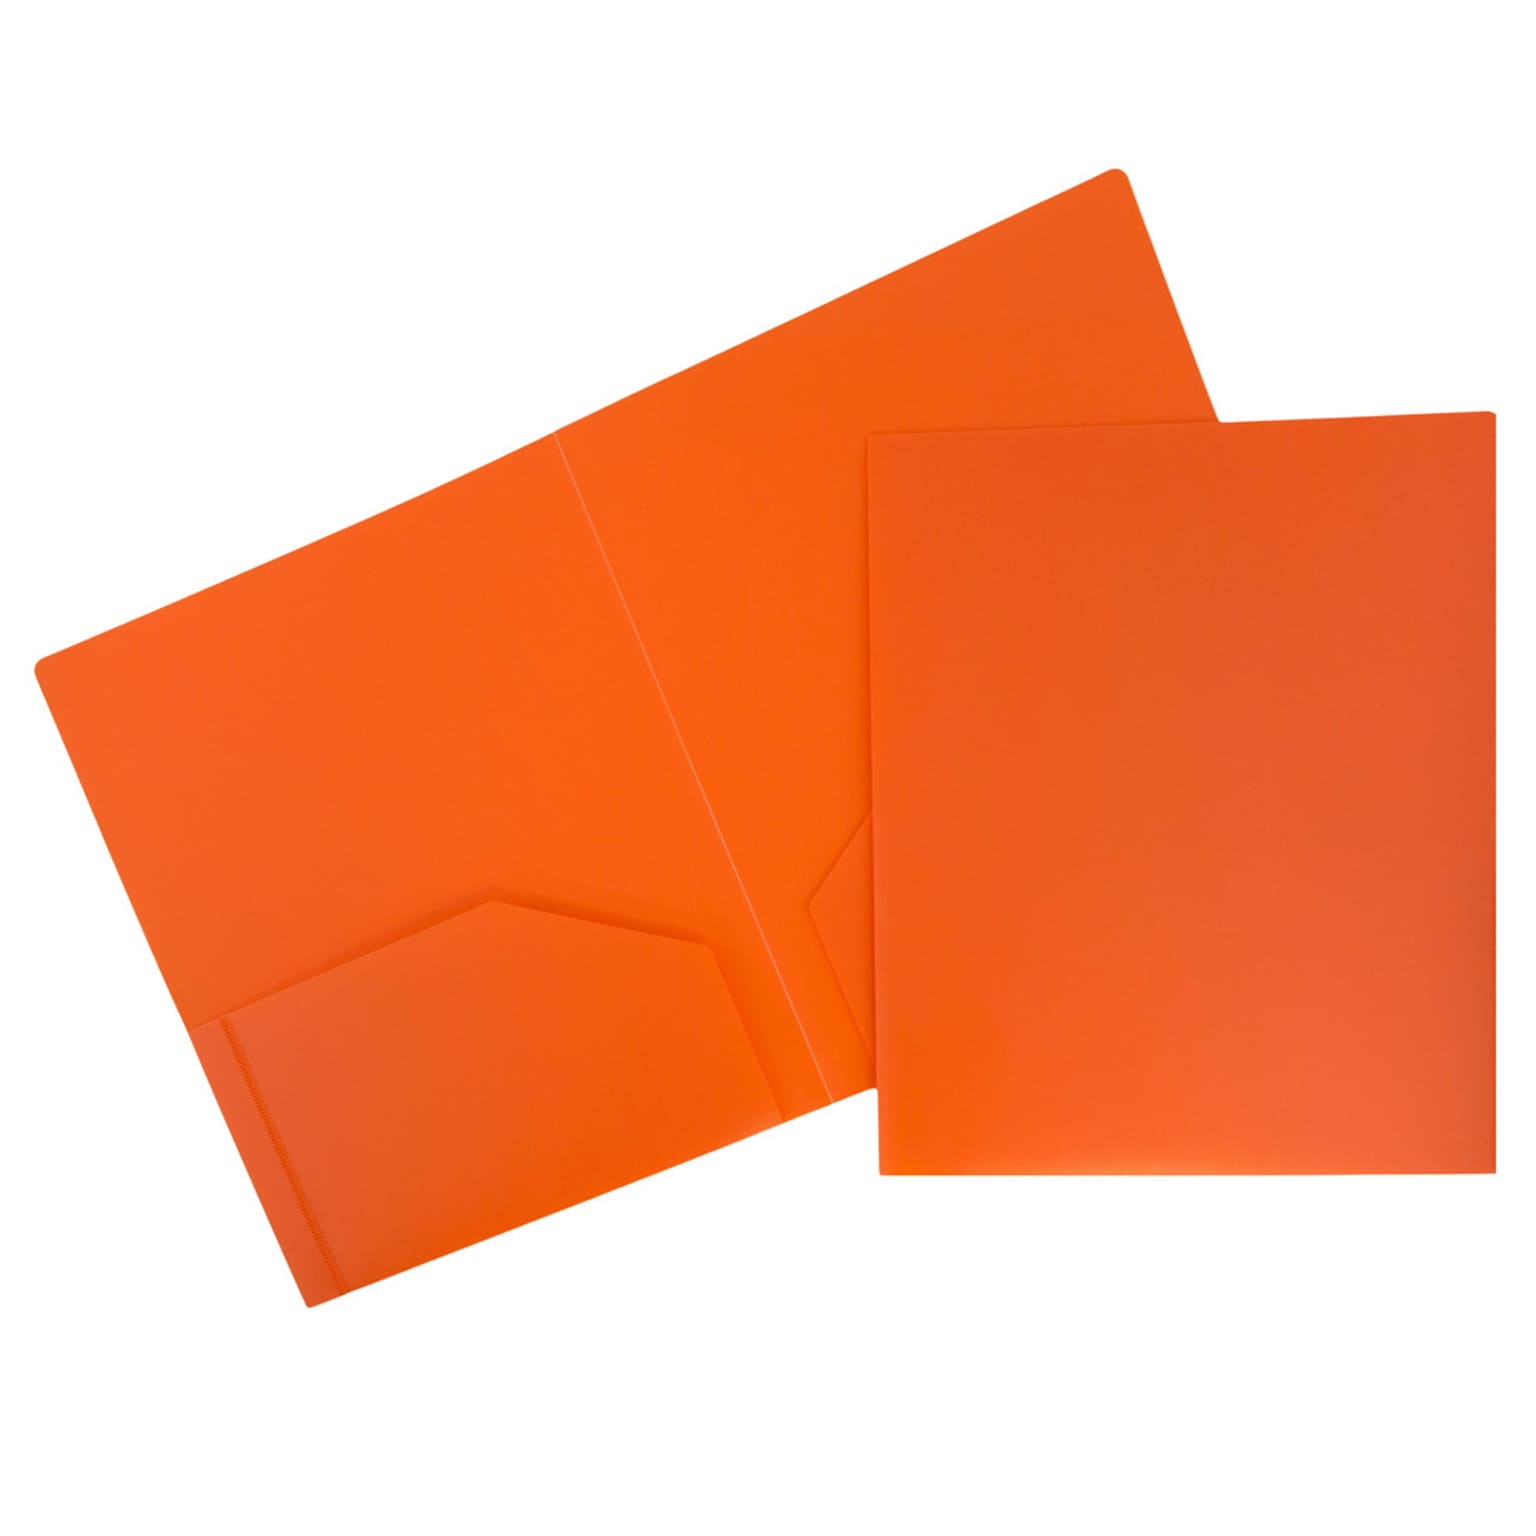 JAM Paper Heavy Duty 2-Pocket Folders, Orange, 6/Pack (946176D)